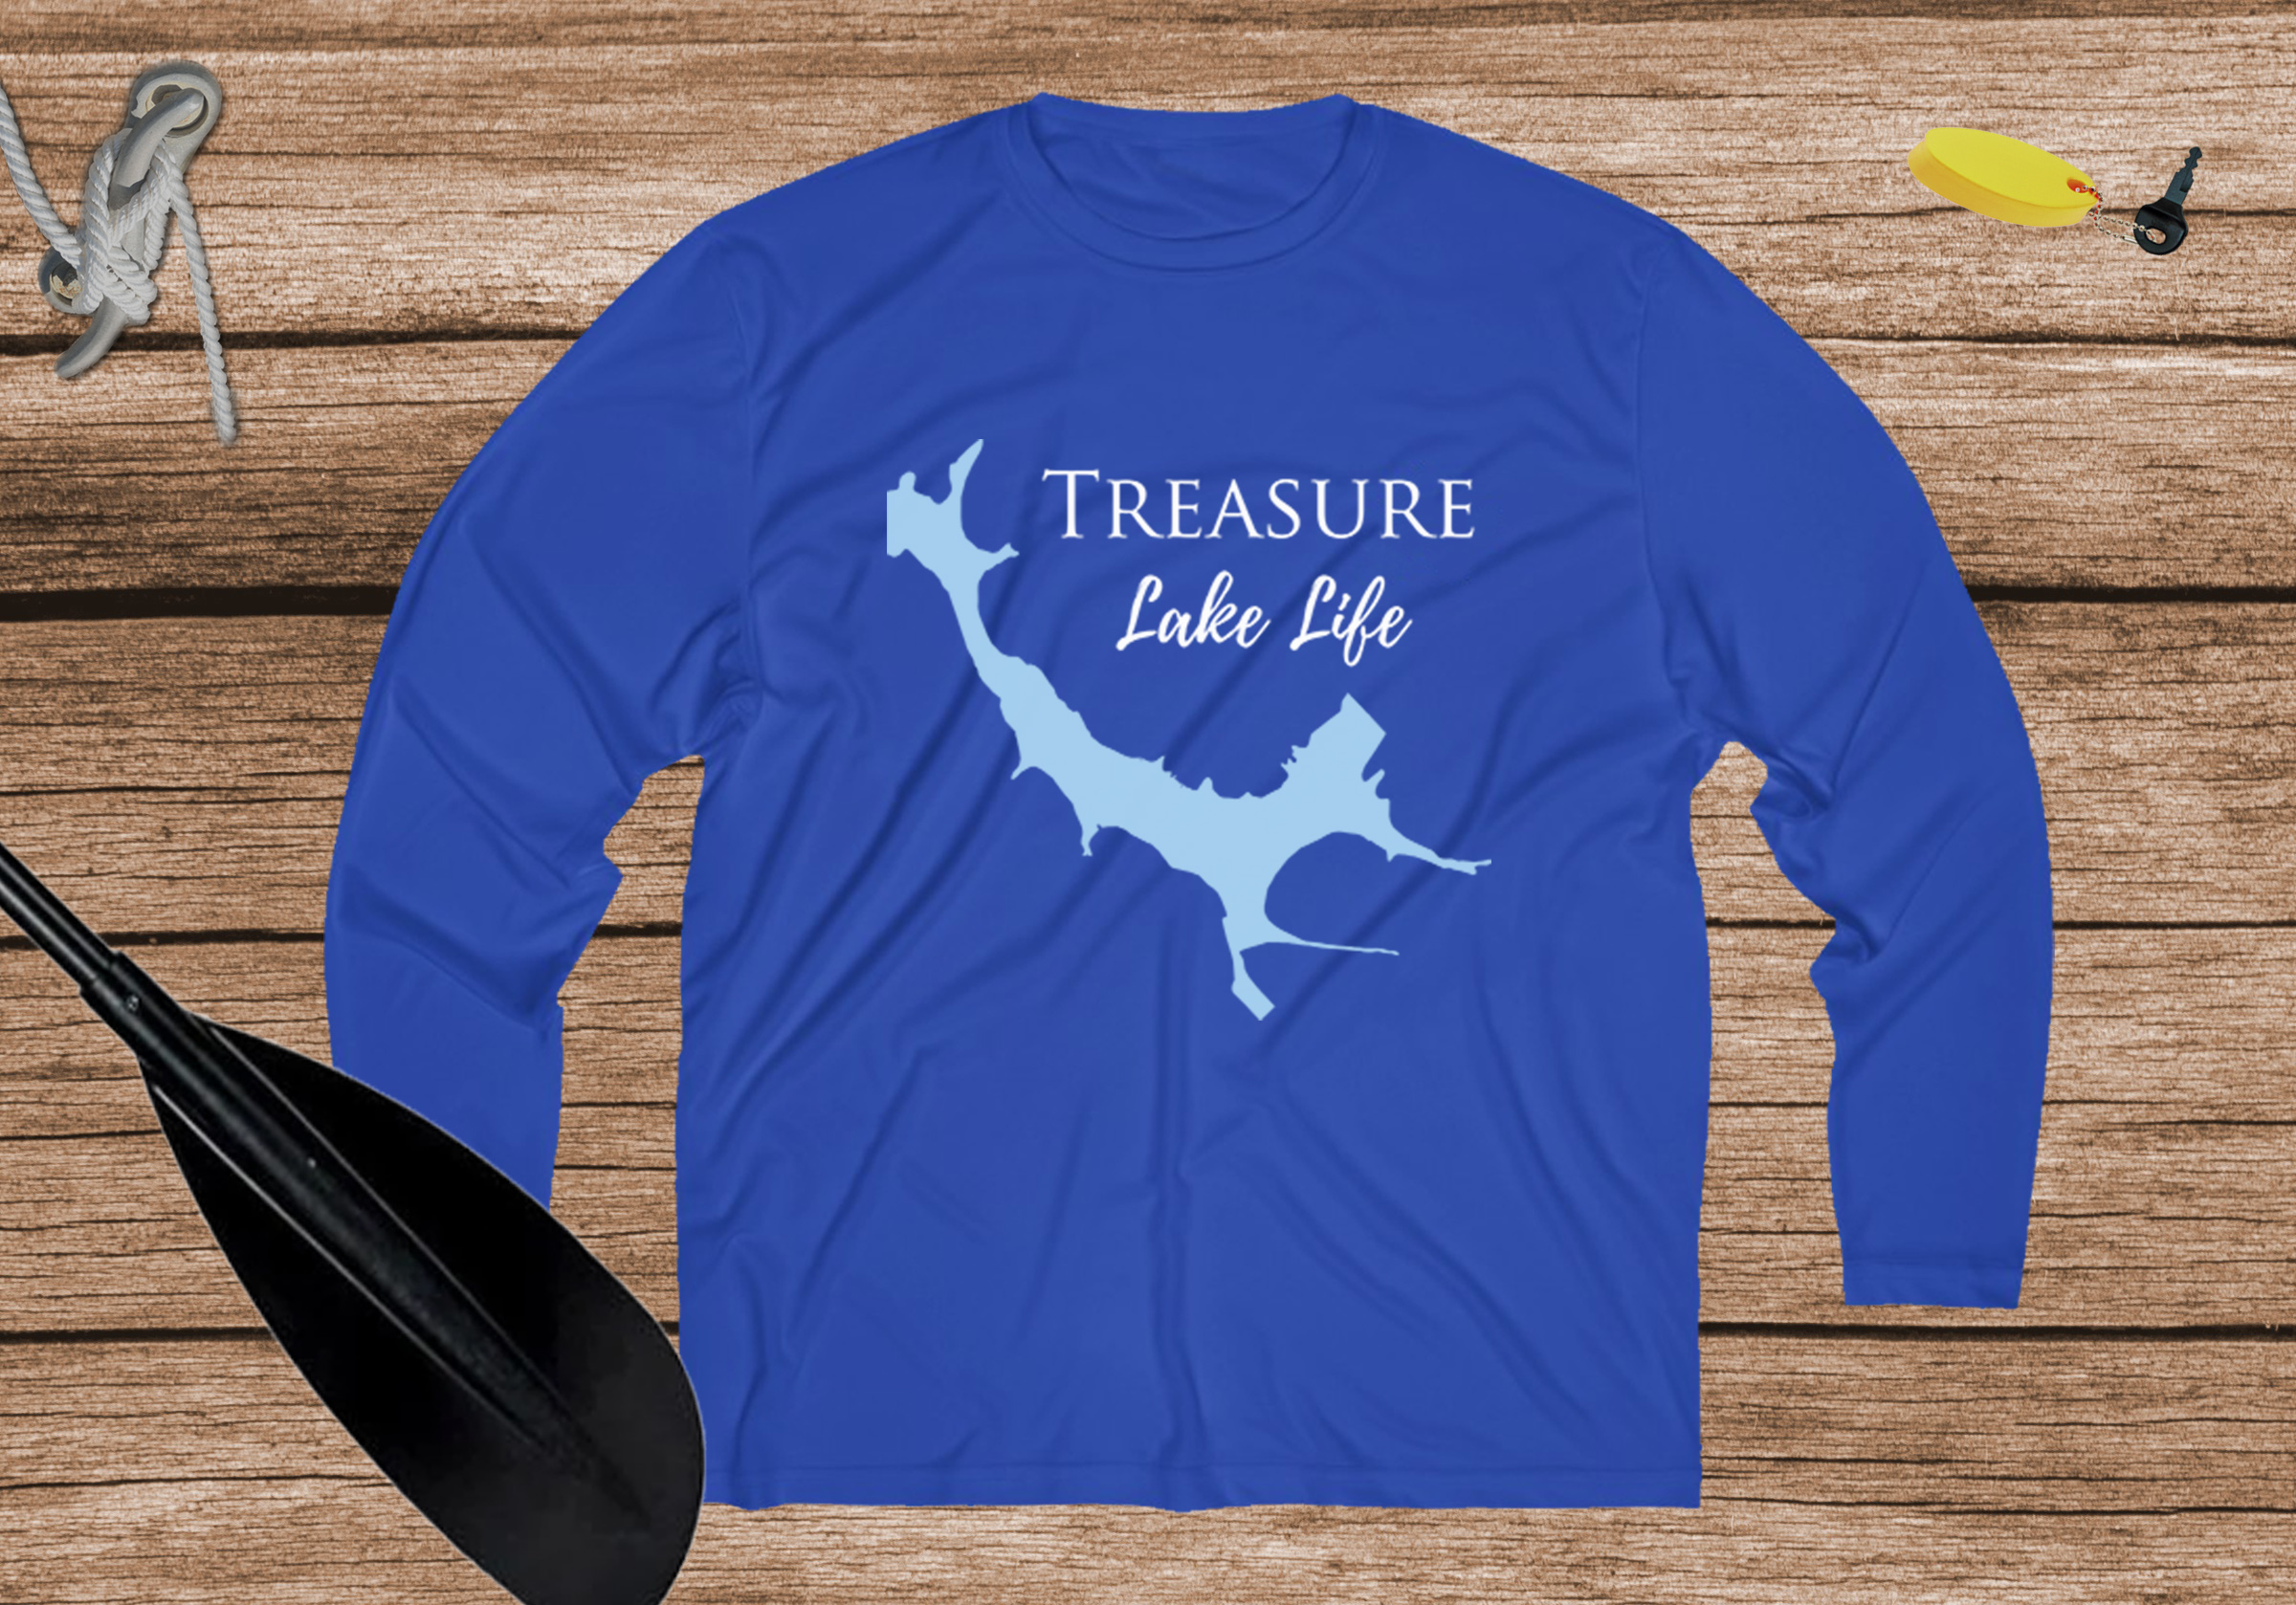 Treasure Lake Life Dri-fit Boating Shirt - Breathable Material- Men's Long Sleeve Moisture Wicking Tee - Pennsylvania Lake